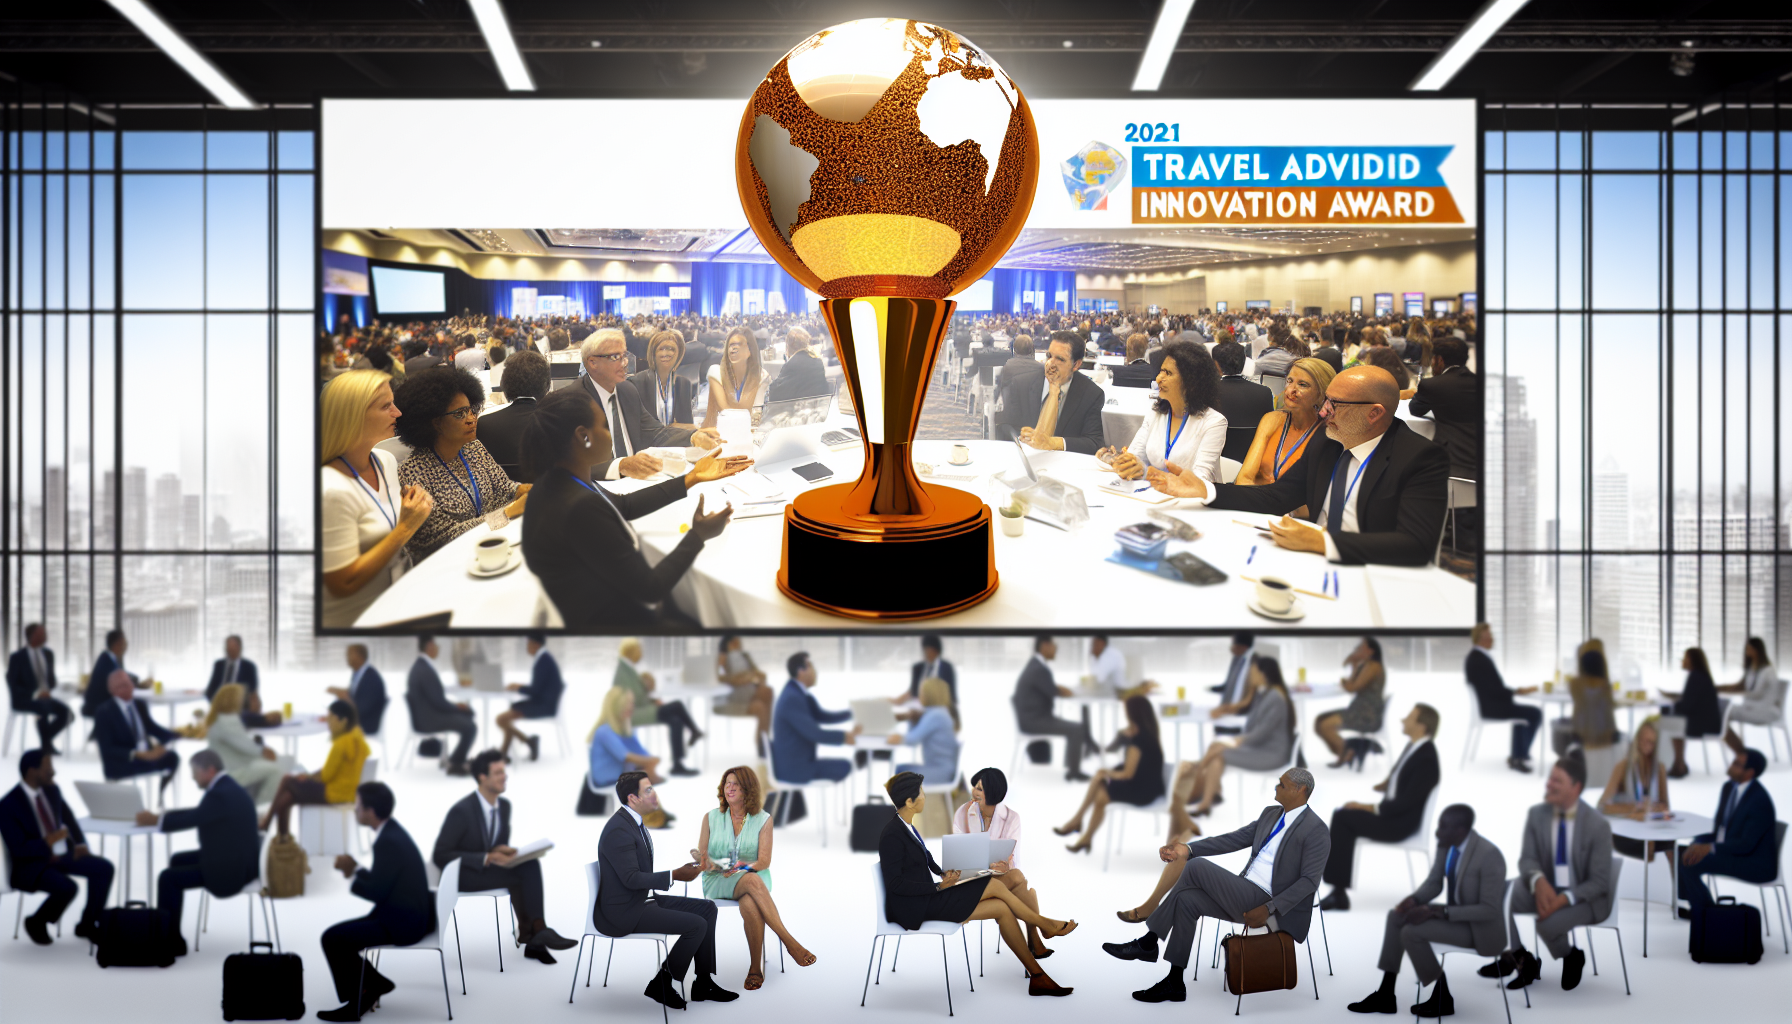 Avoya travel impresses at ASTA global convention, wins 2021 travel advisor innovation award